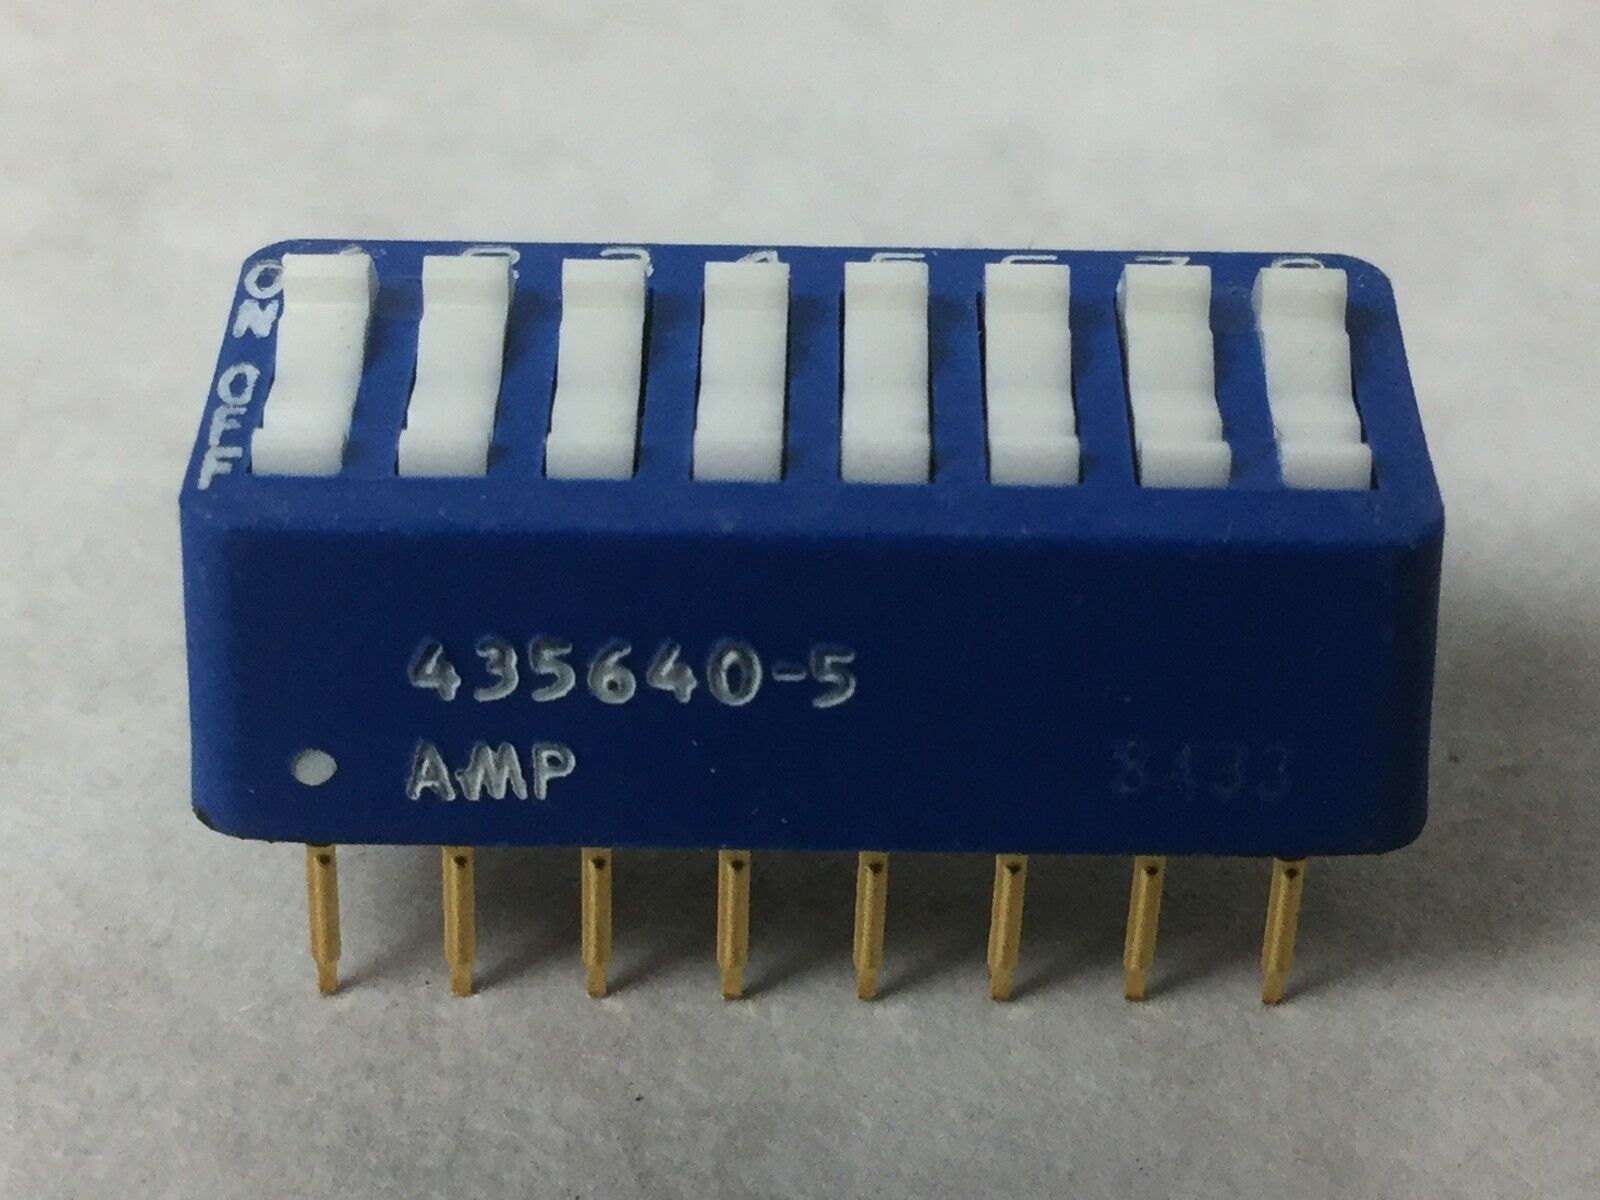 AMP 435640-5 Rocker Switch, NEW